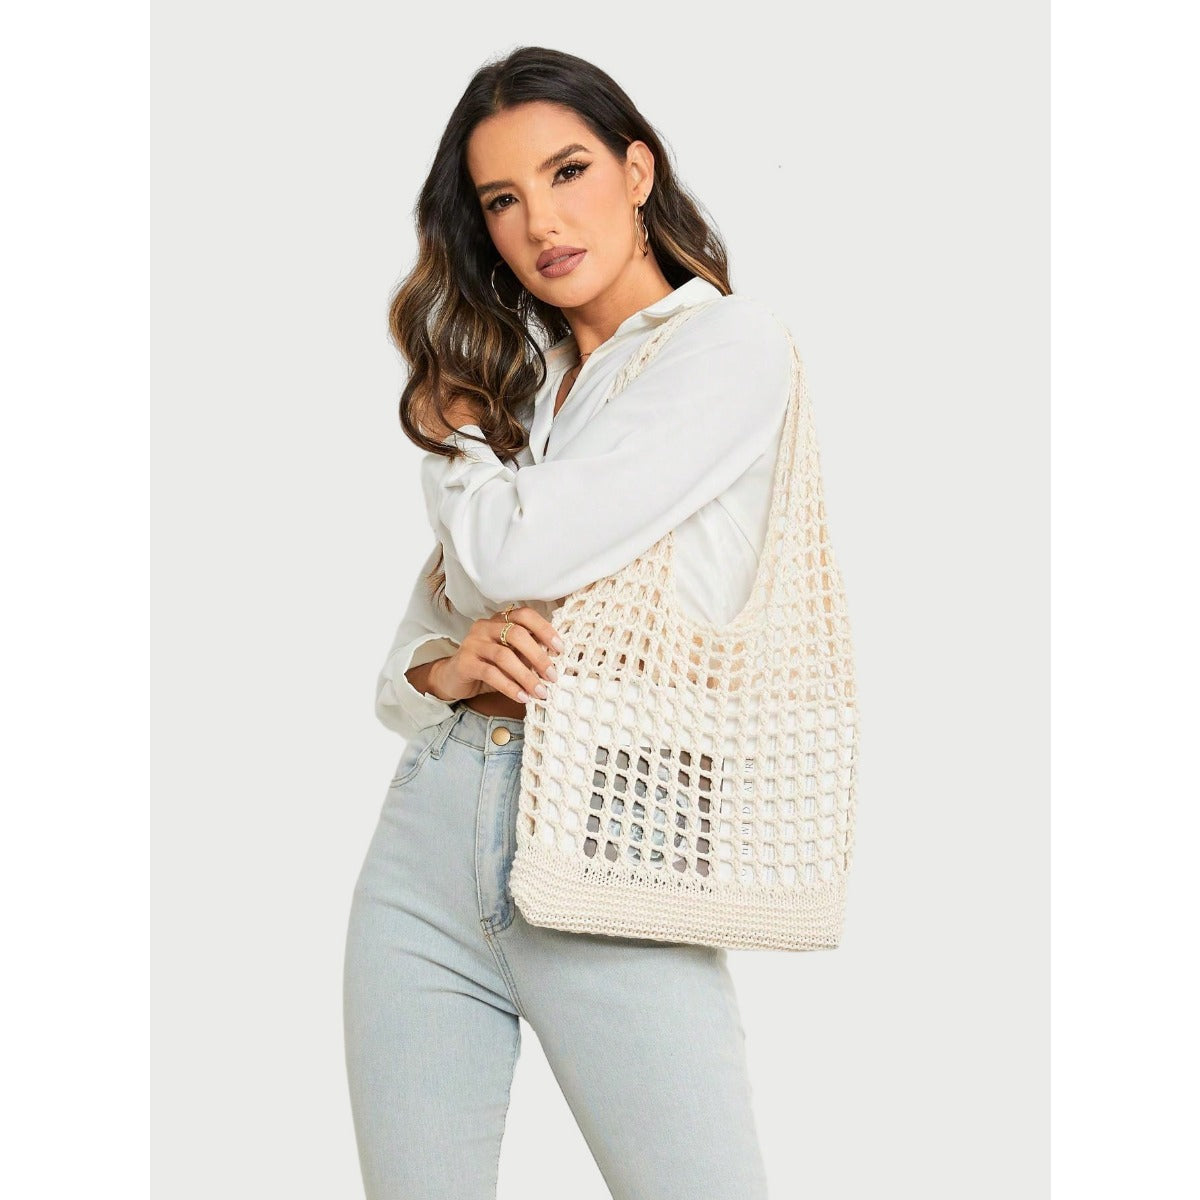 Women's Hollow Out Knit Tote Handbags Crochet Shoulder Bag